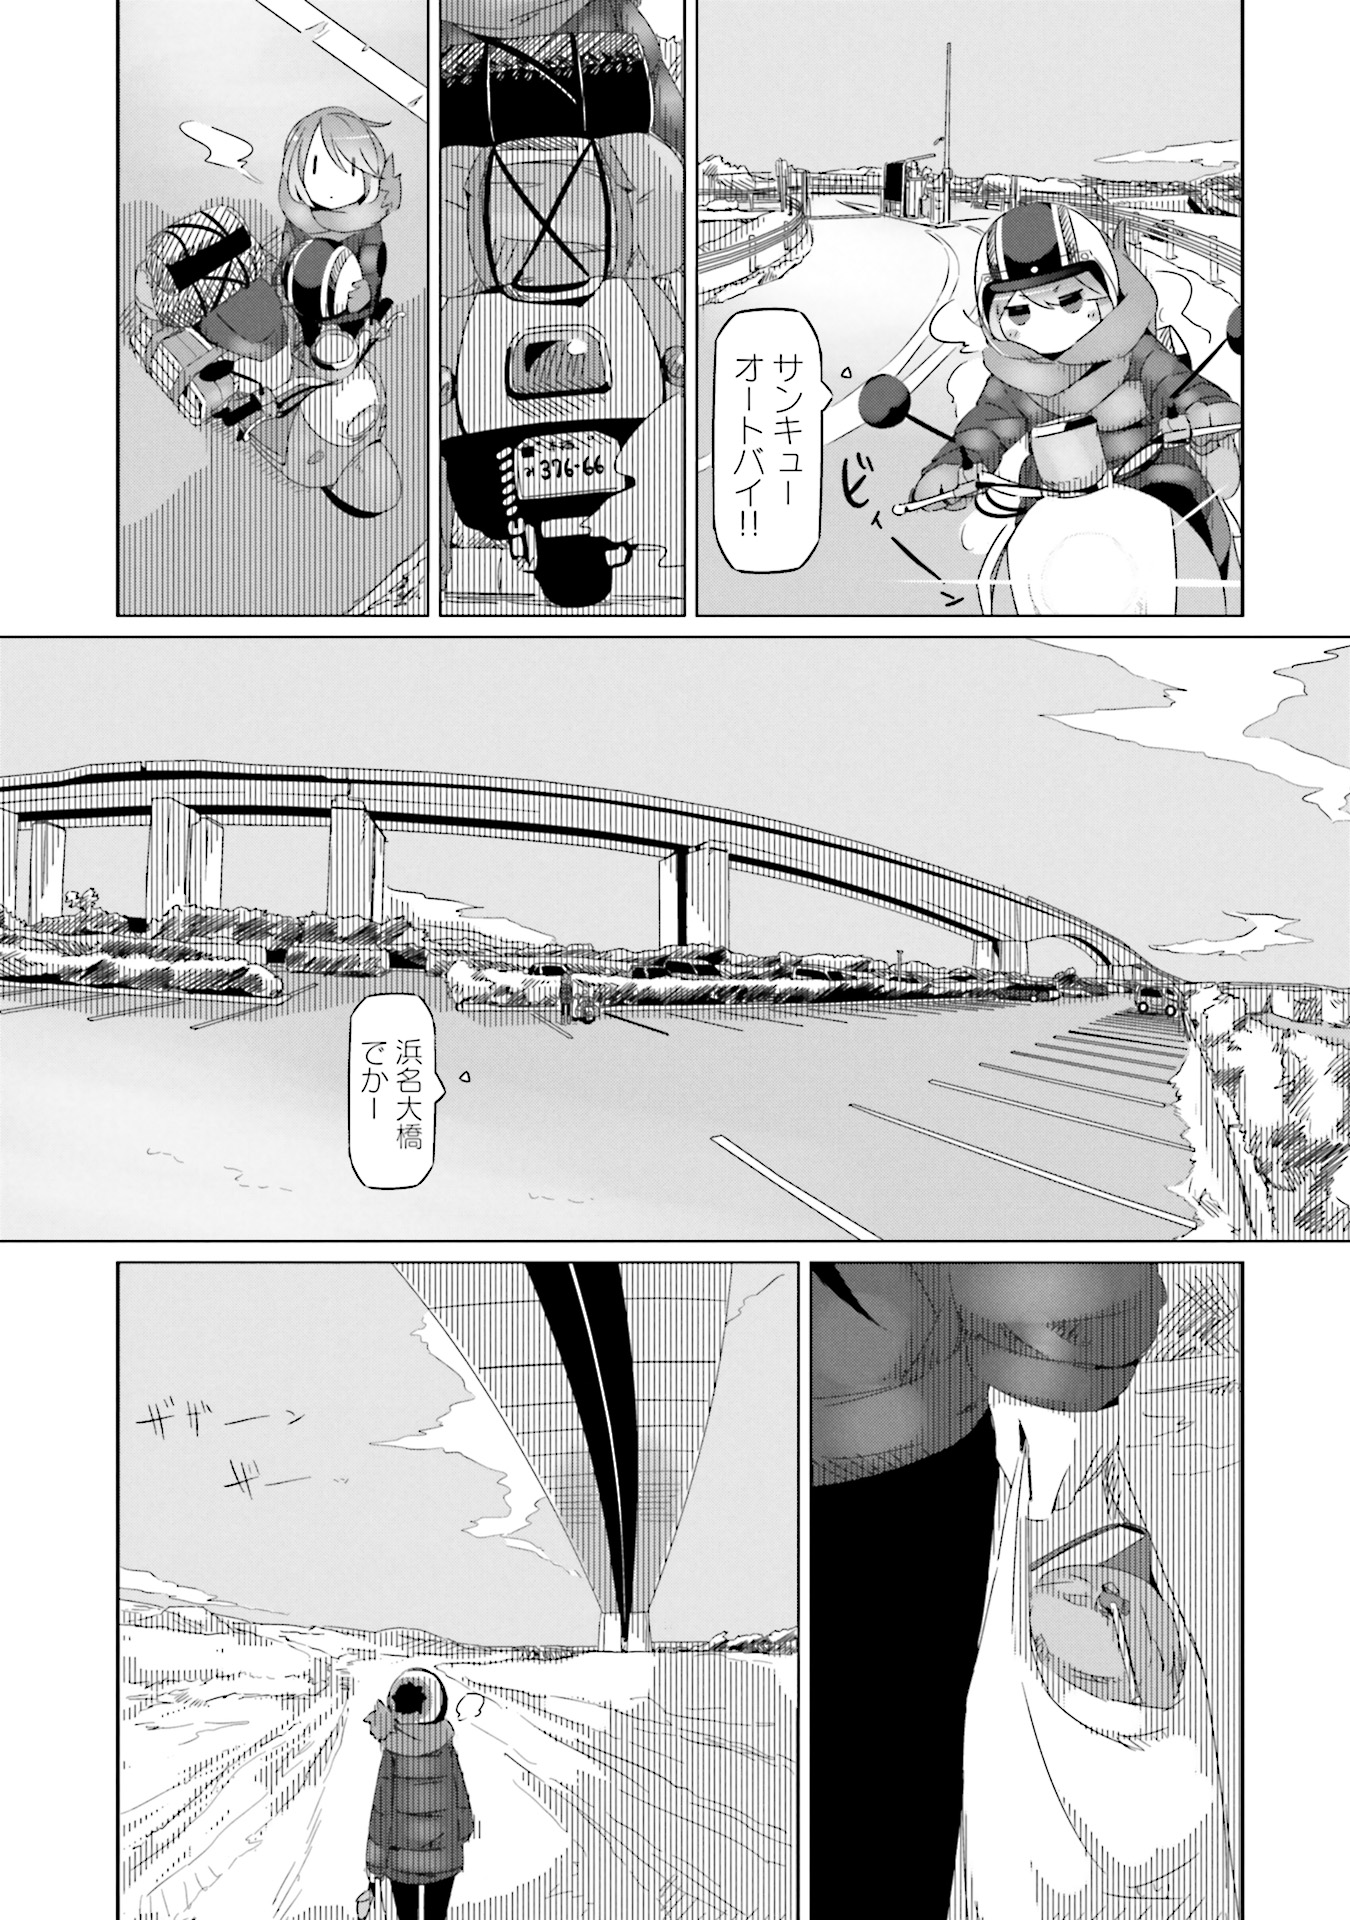 Yuru Camp - Chapter 27 - Page 3